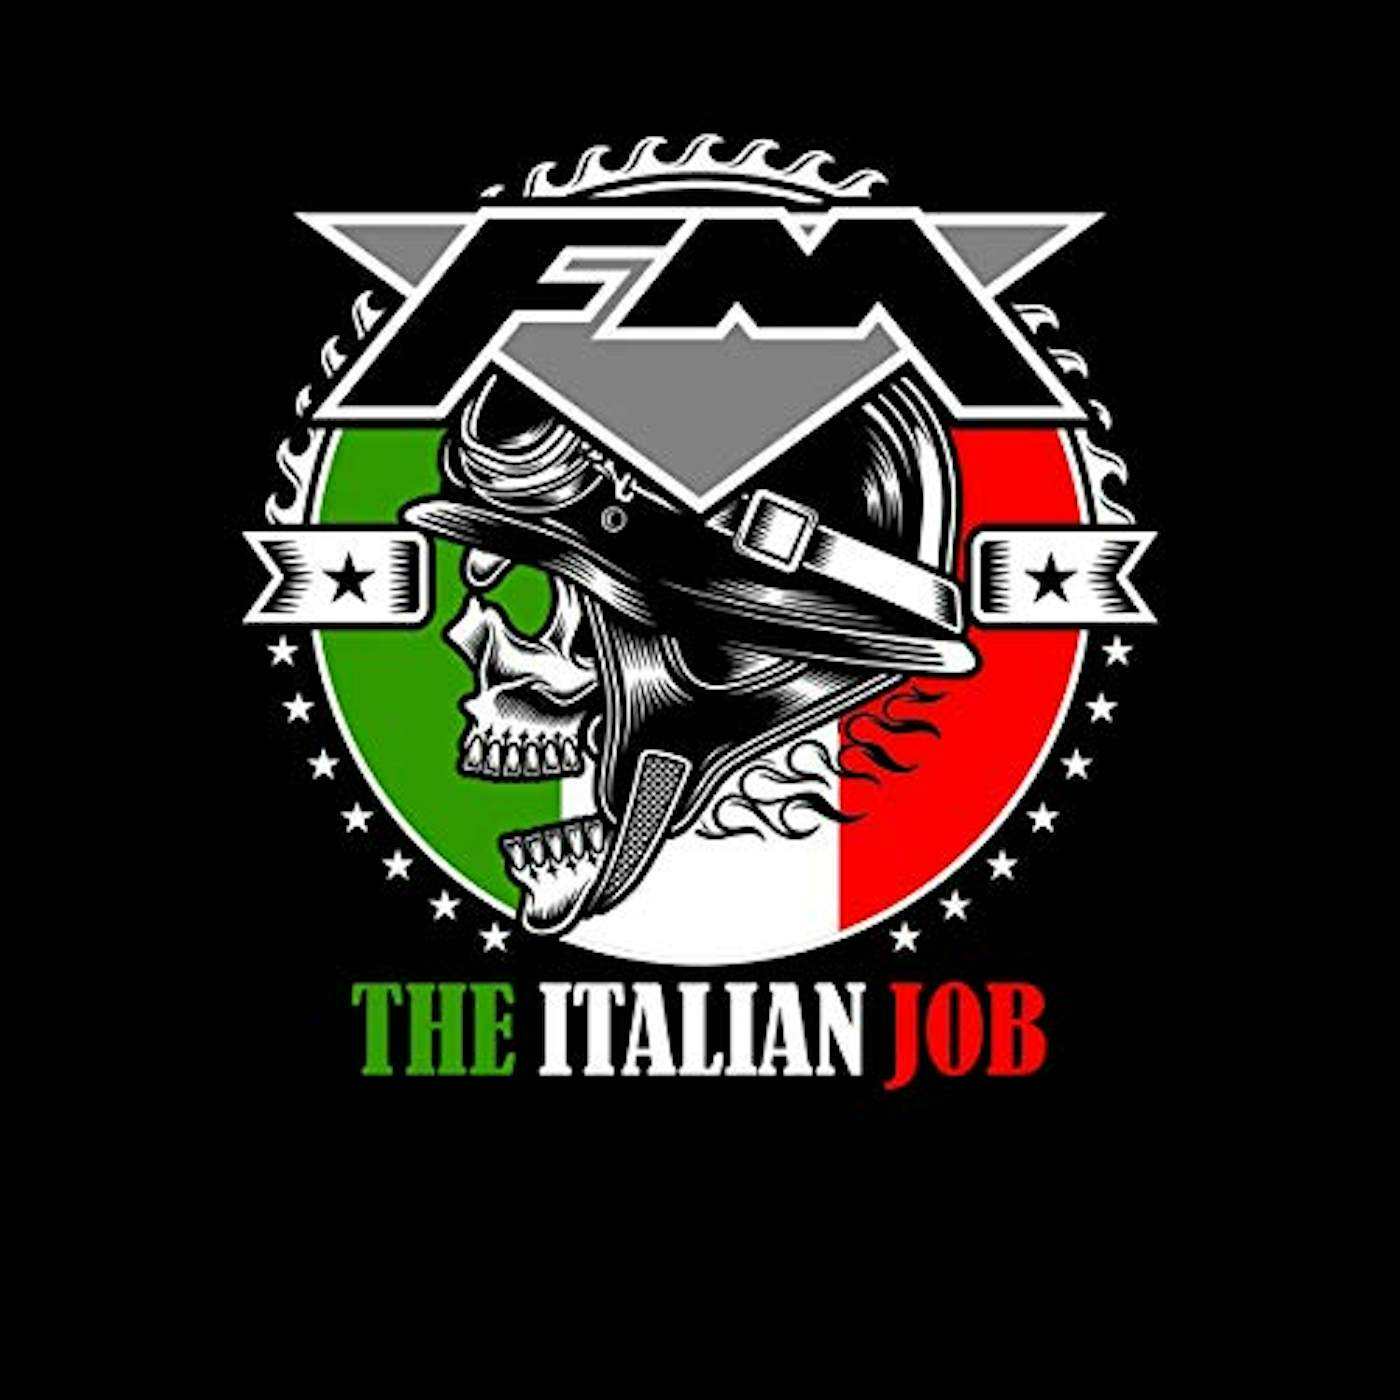 FM ITALIAN JOB (LIVE) CD